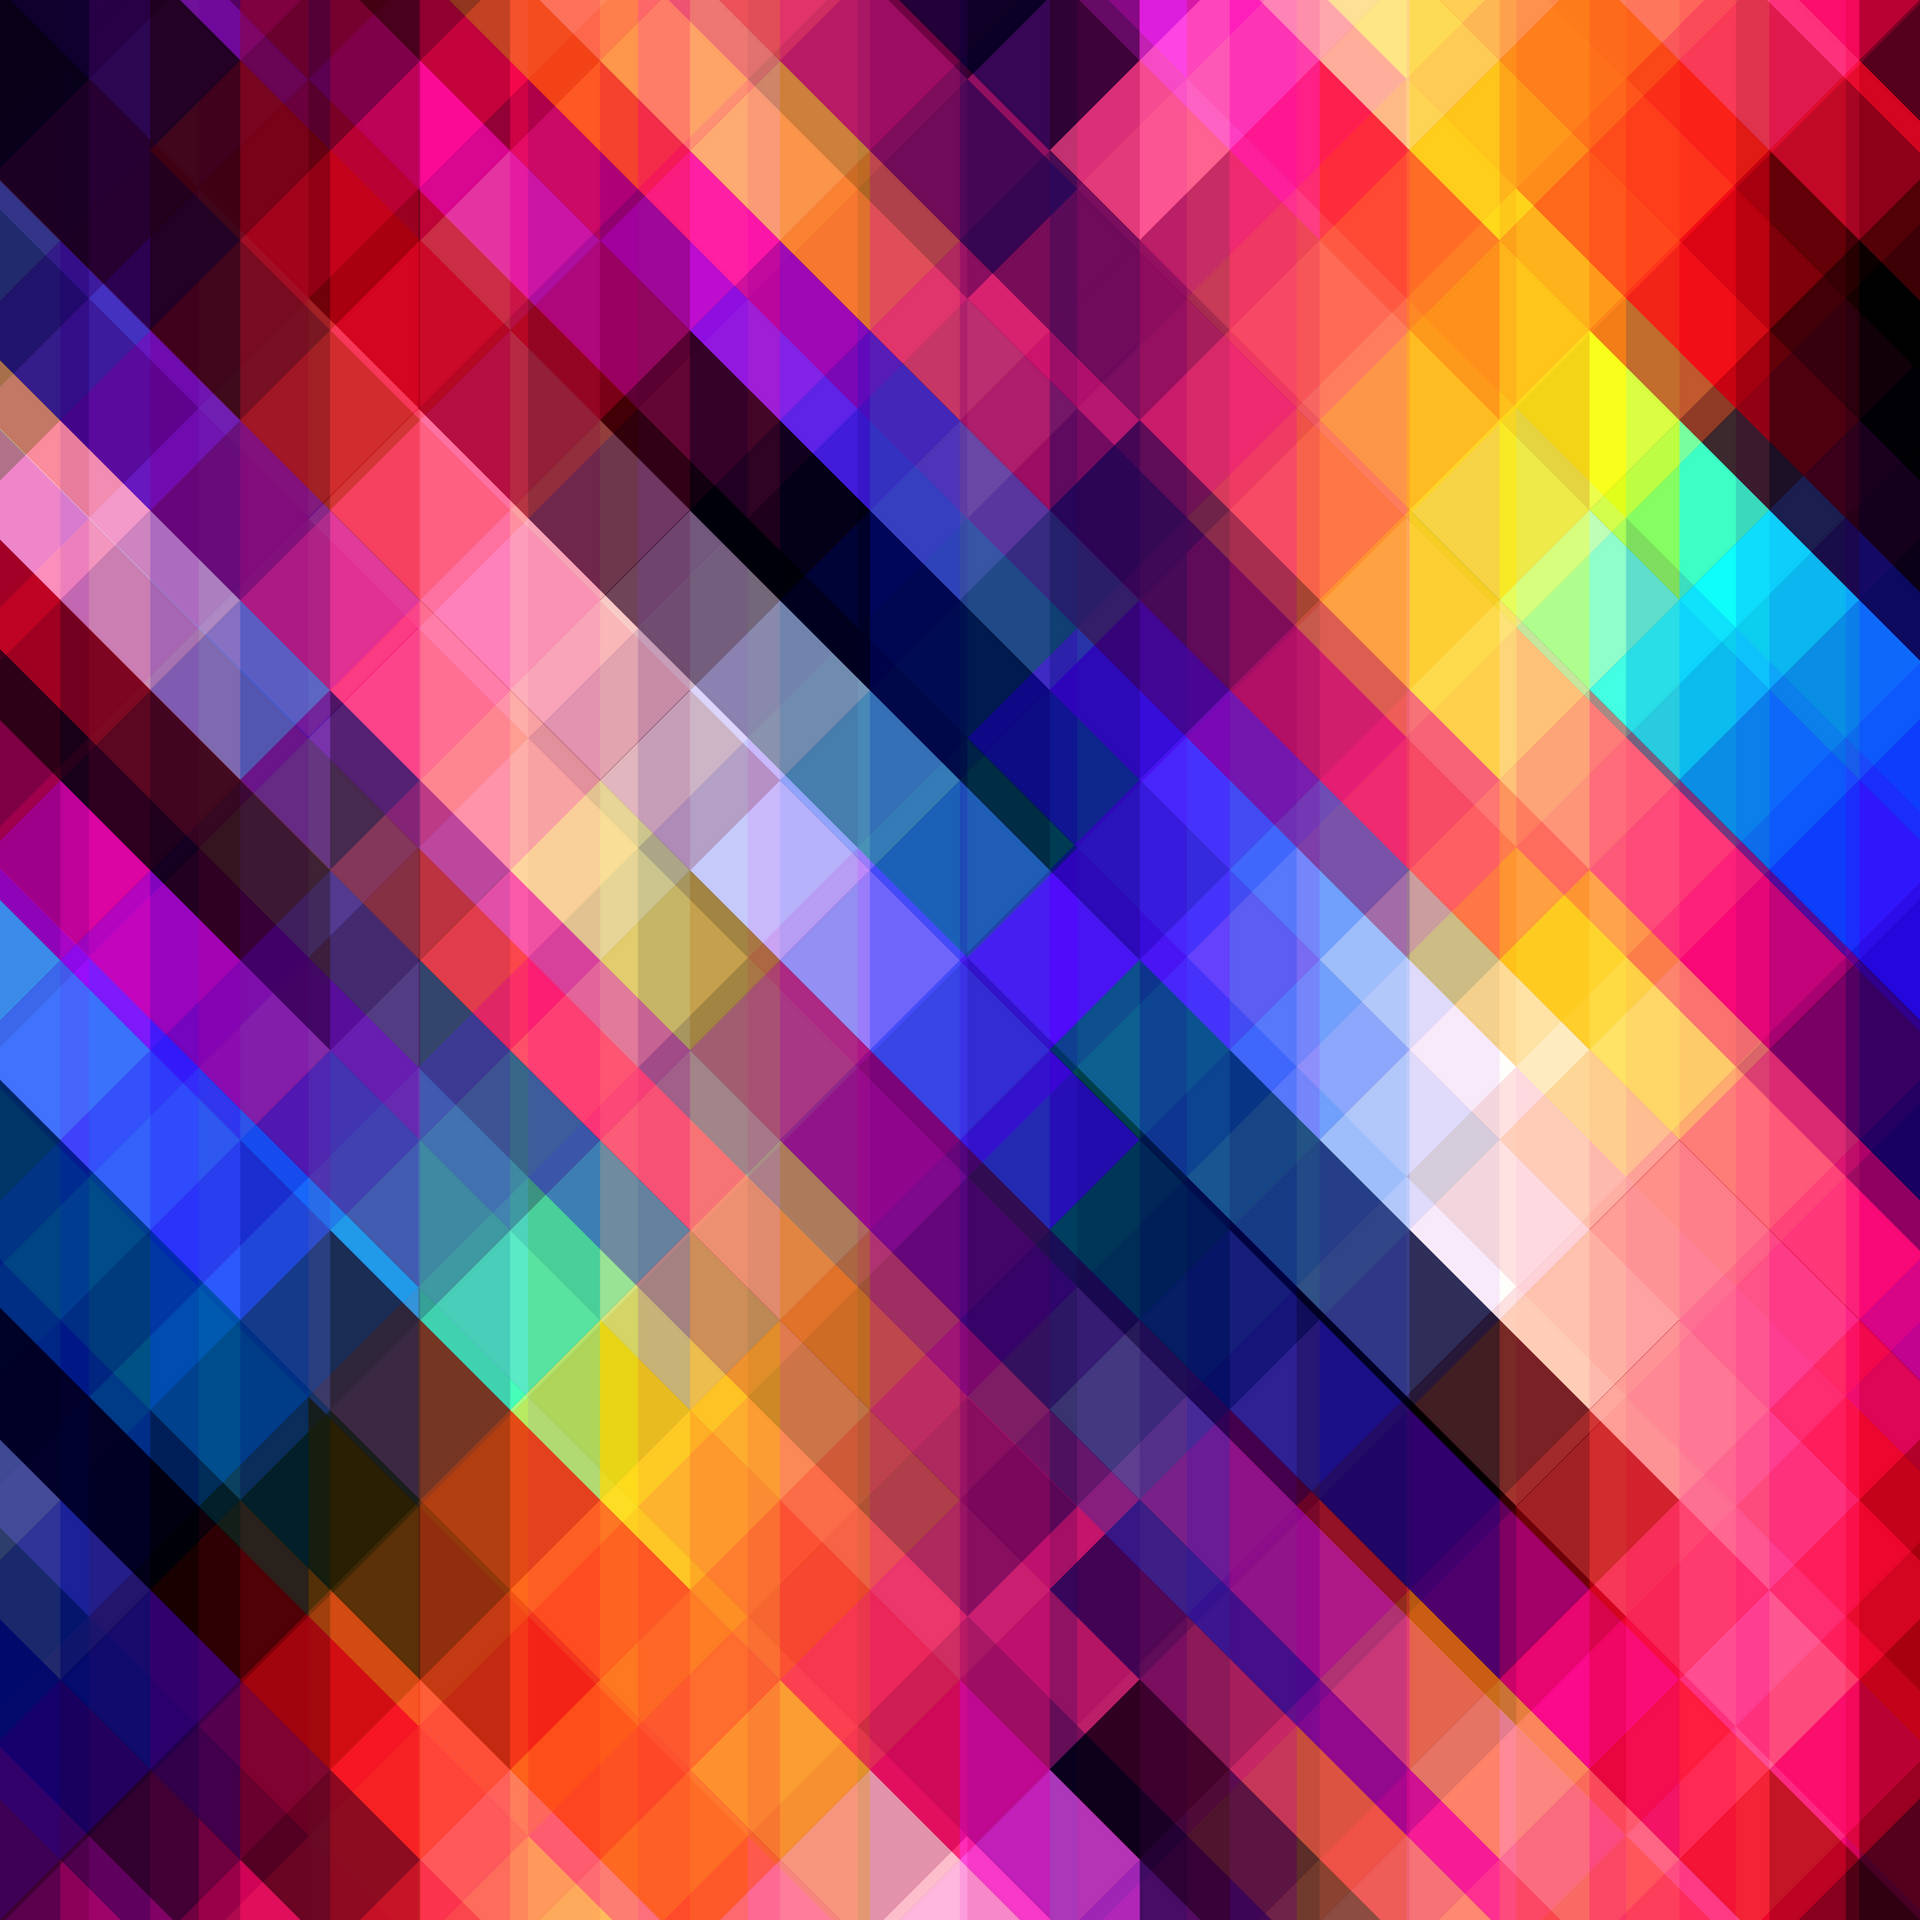 Vibrant Rainbow Mosaic Striped Cube Art Wallpaper